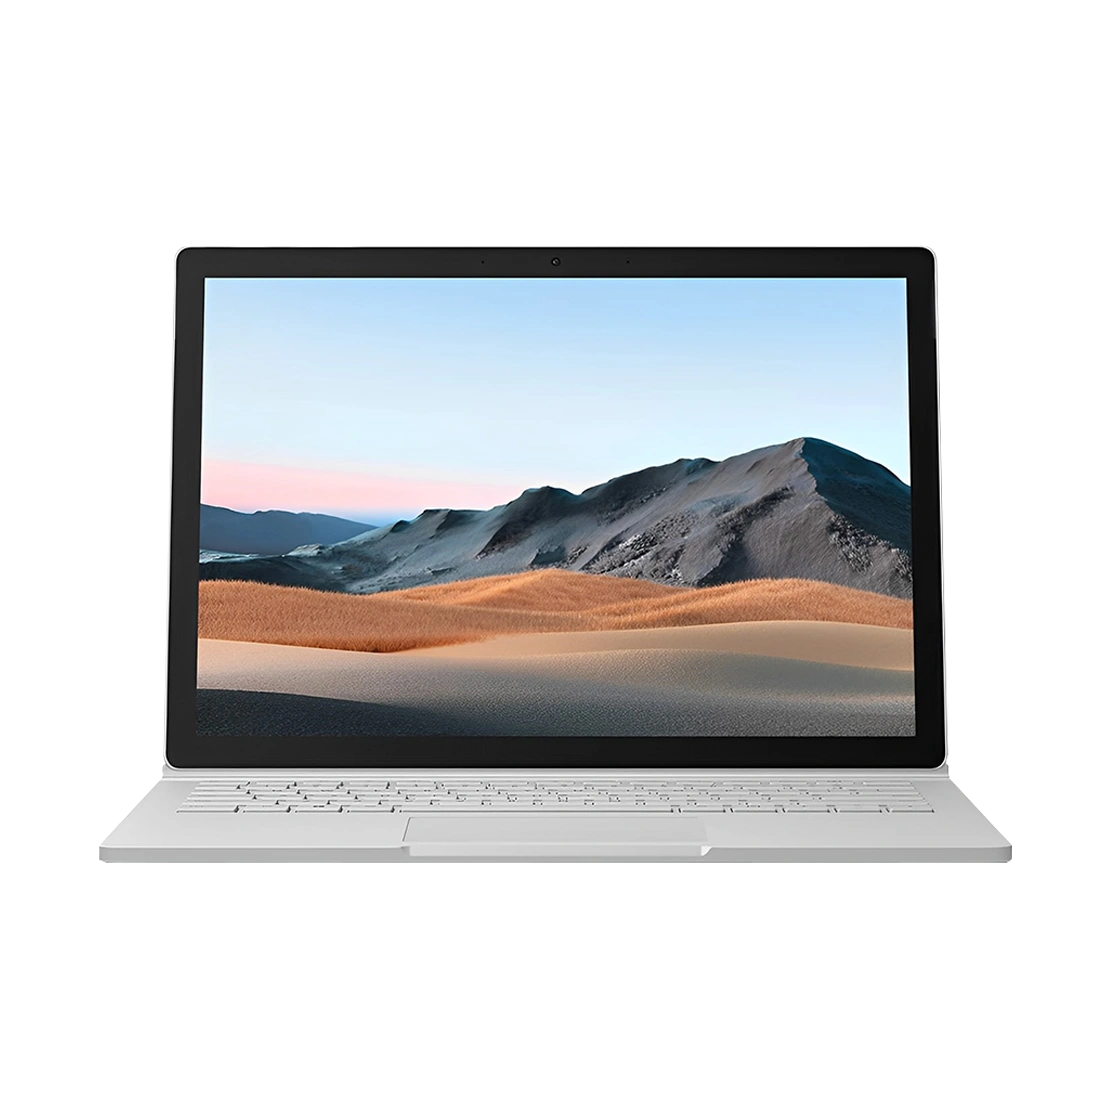 Microsoft Surface Book 3 13.5 inch Corei7 16GB 256GB GTX 1650 4GB